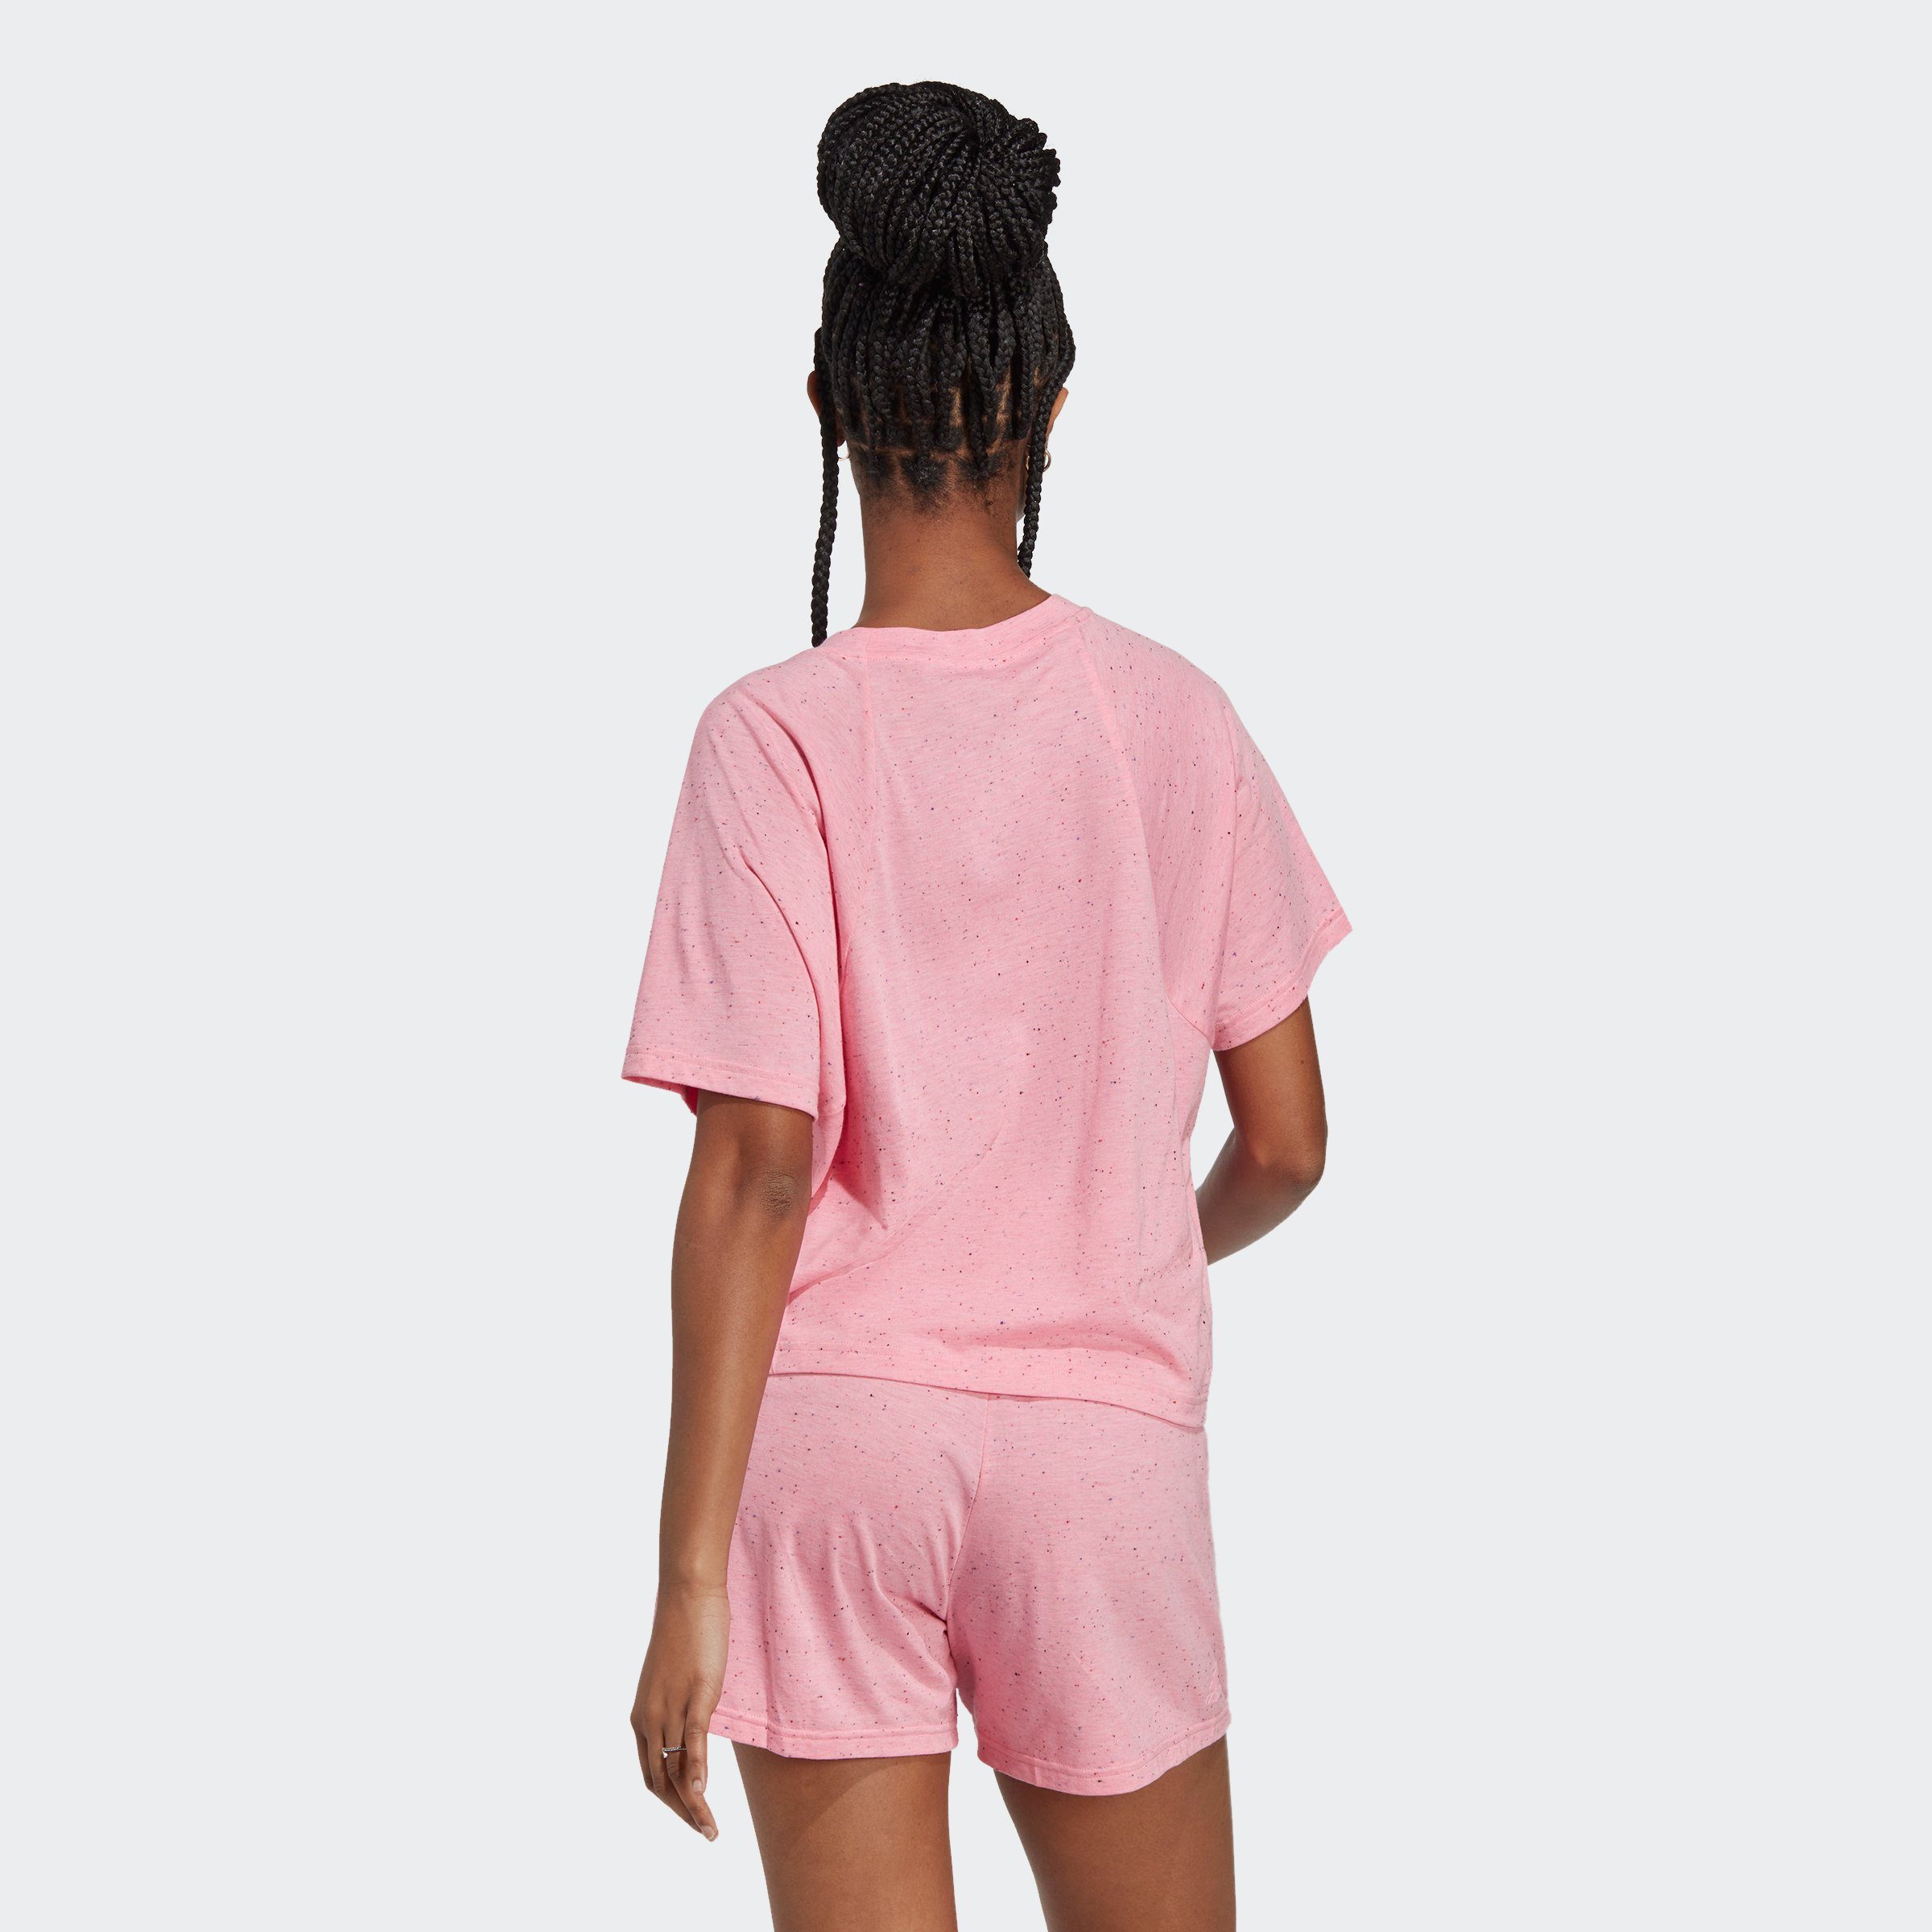 adidas Sportswear T-Shirt FUTURE ICONS Pink WINNERS White Mel. Bliss 